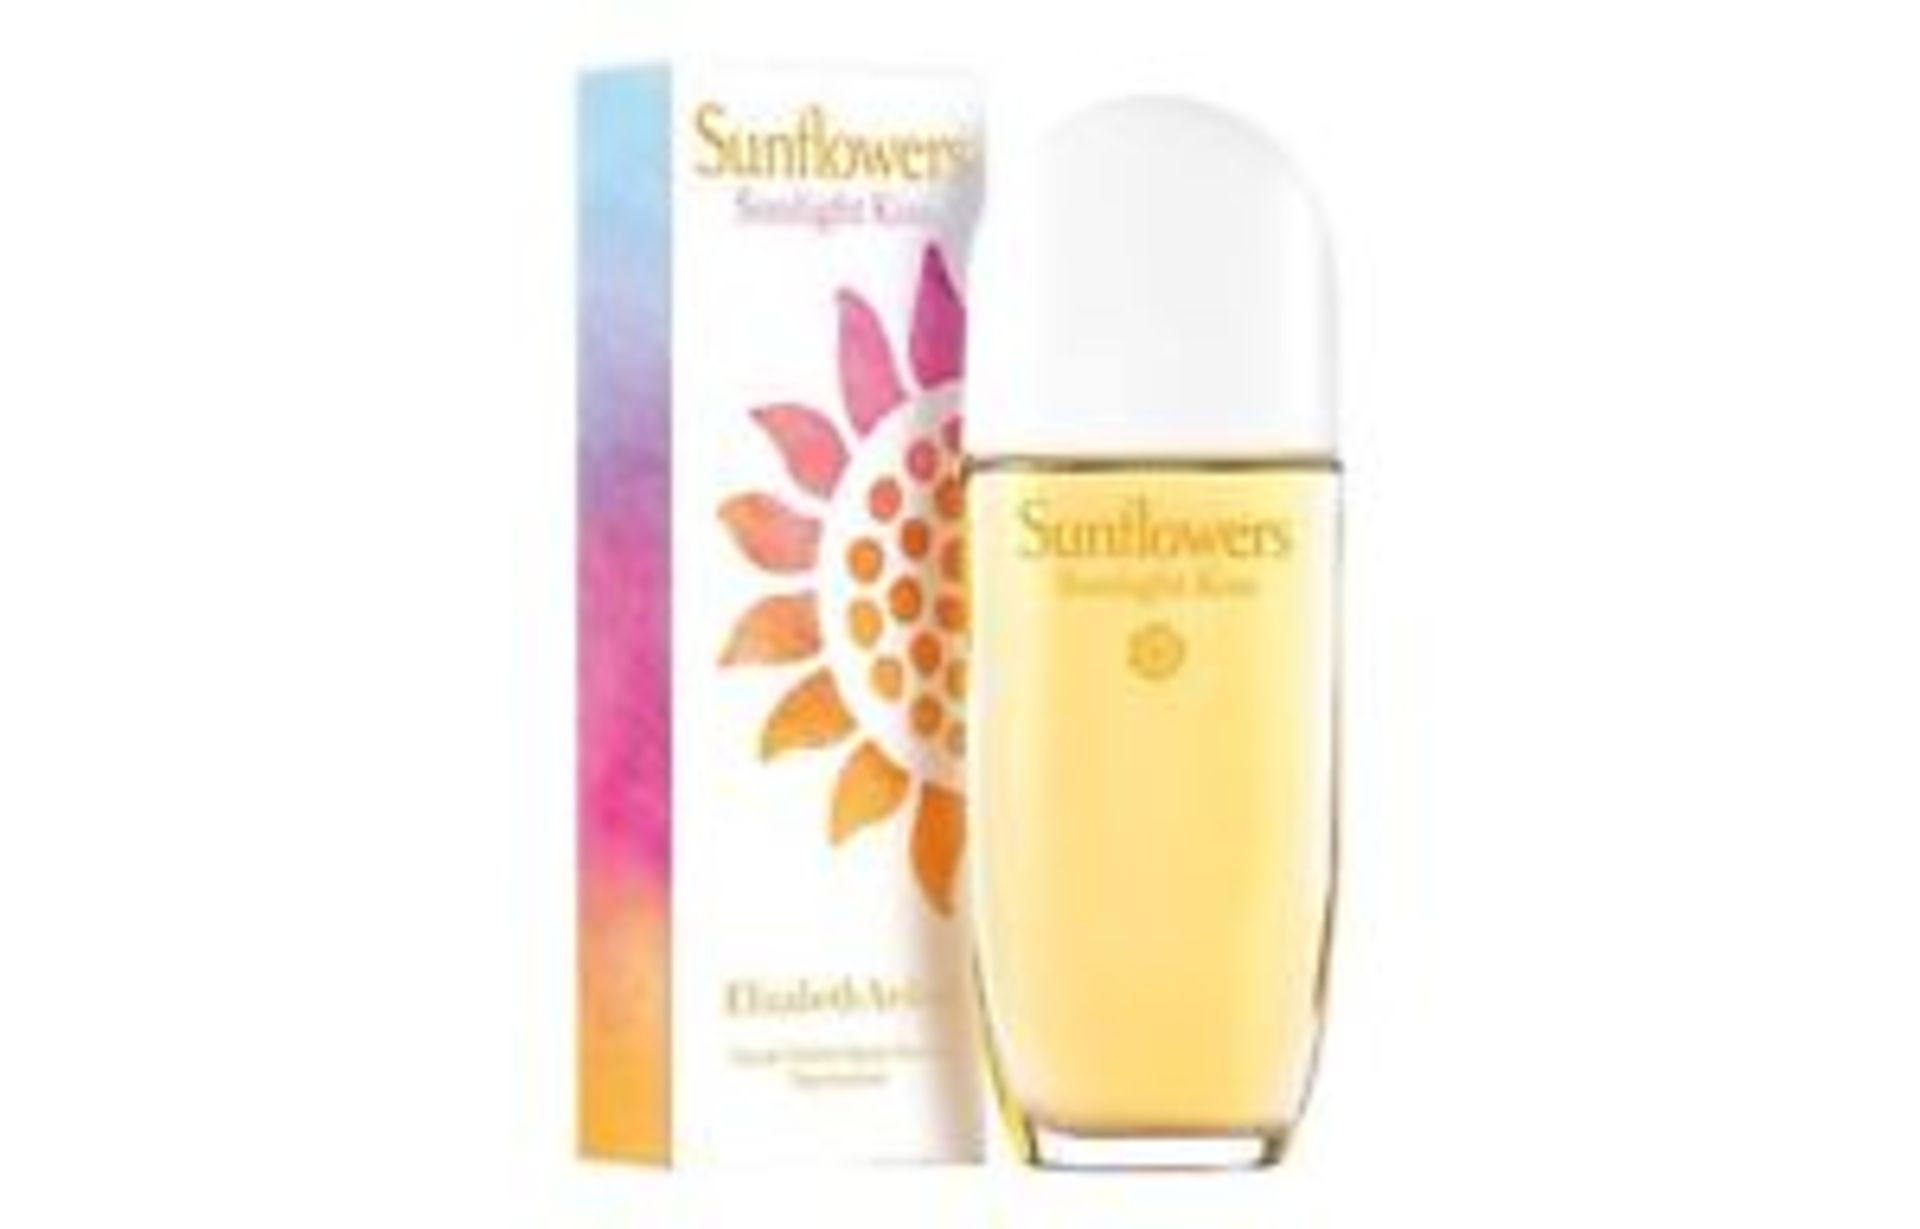 V Brand New Elizabeth Arden Sunflowers Sunlight Kiss 100ml EDT Spray - CosmeticsMegastore Price £